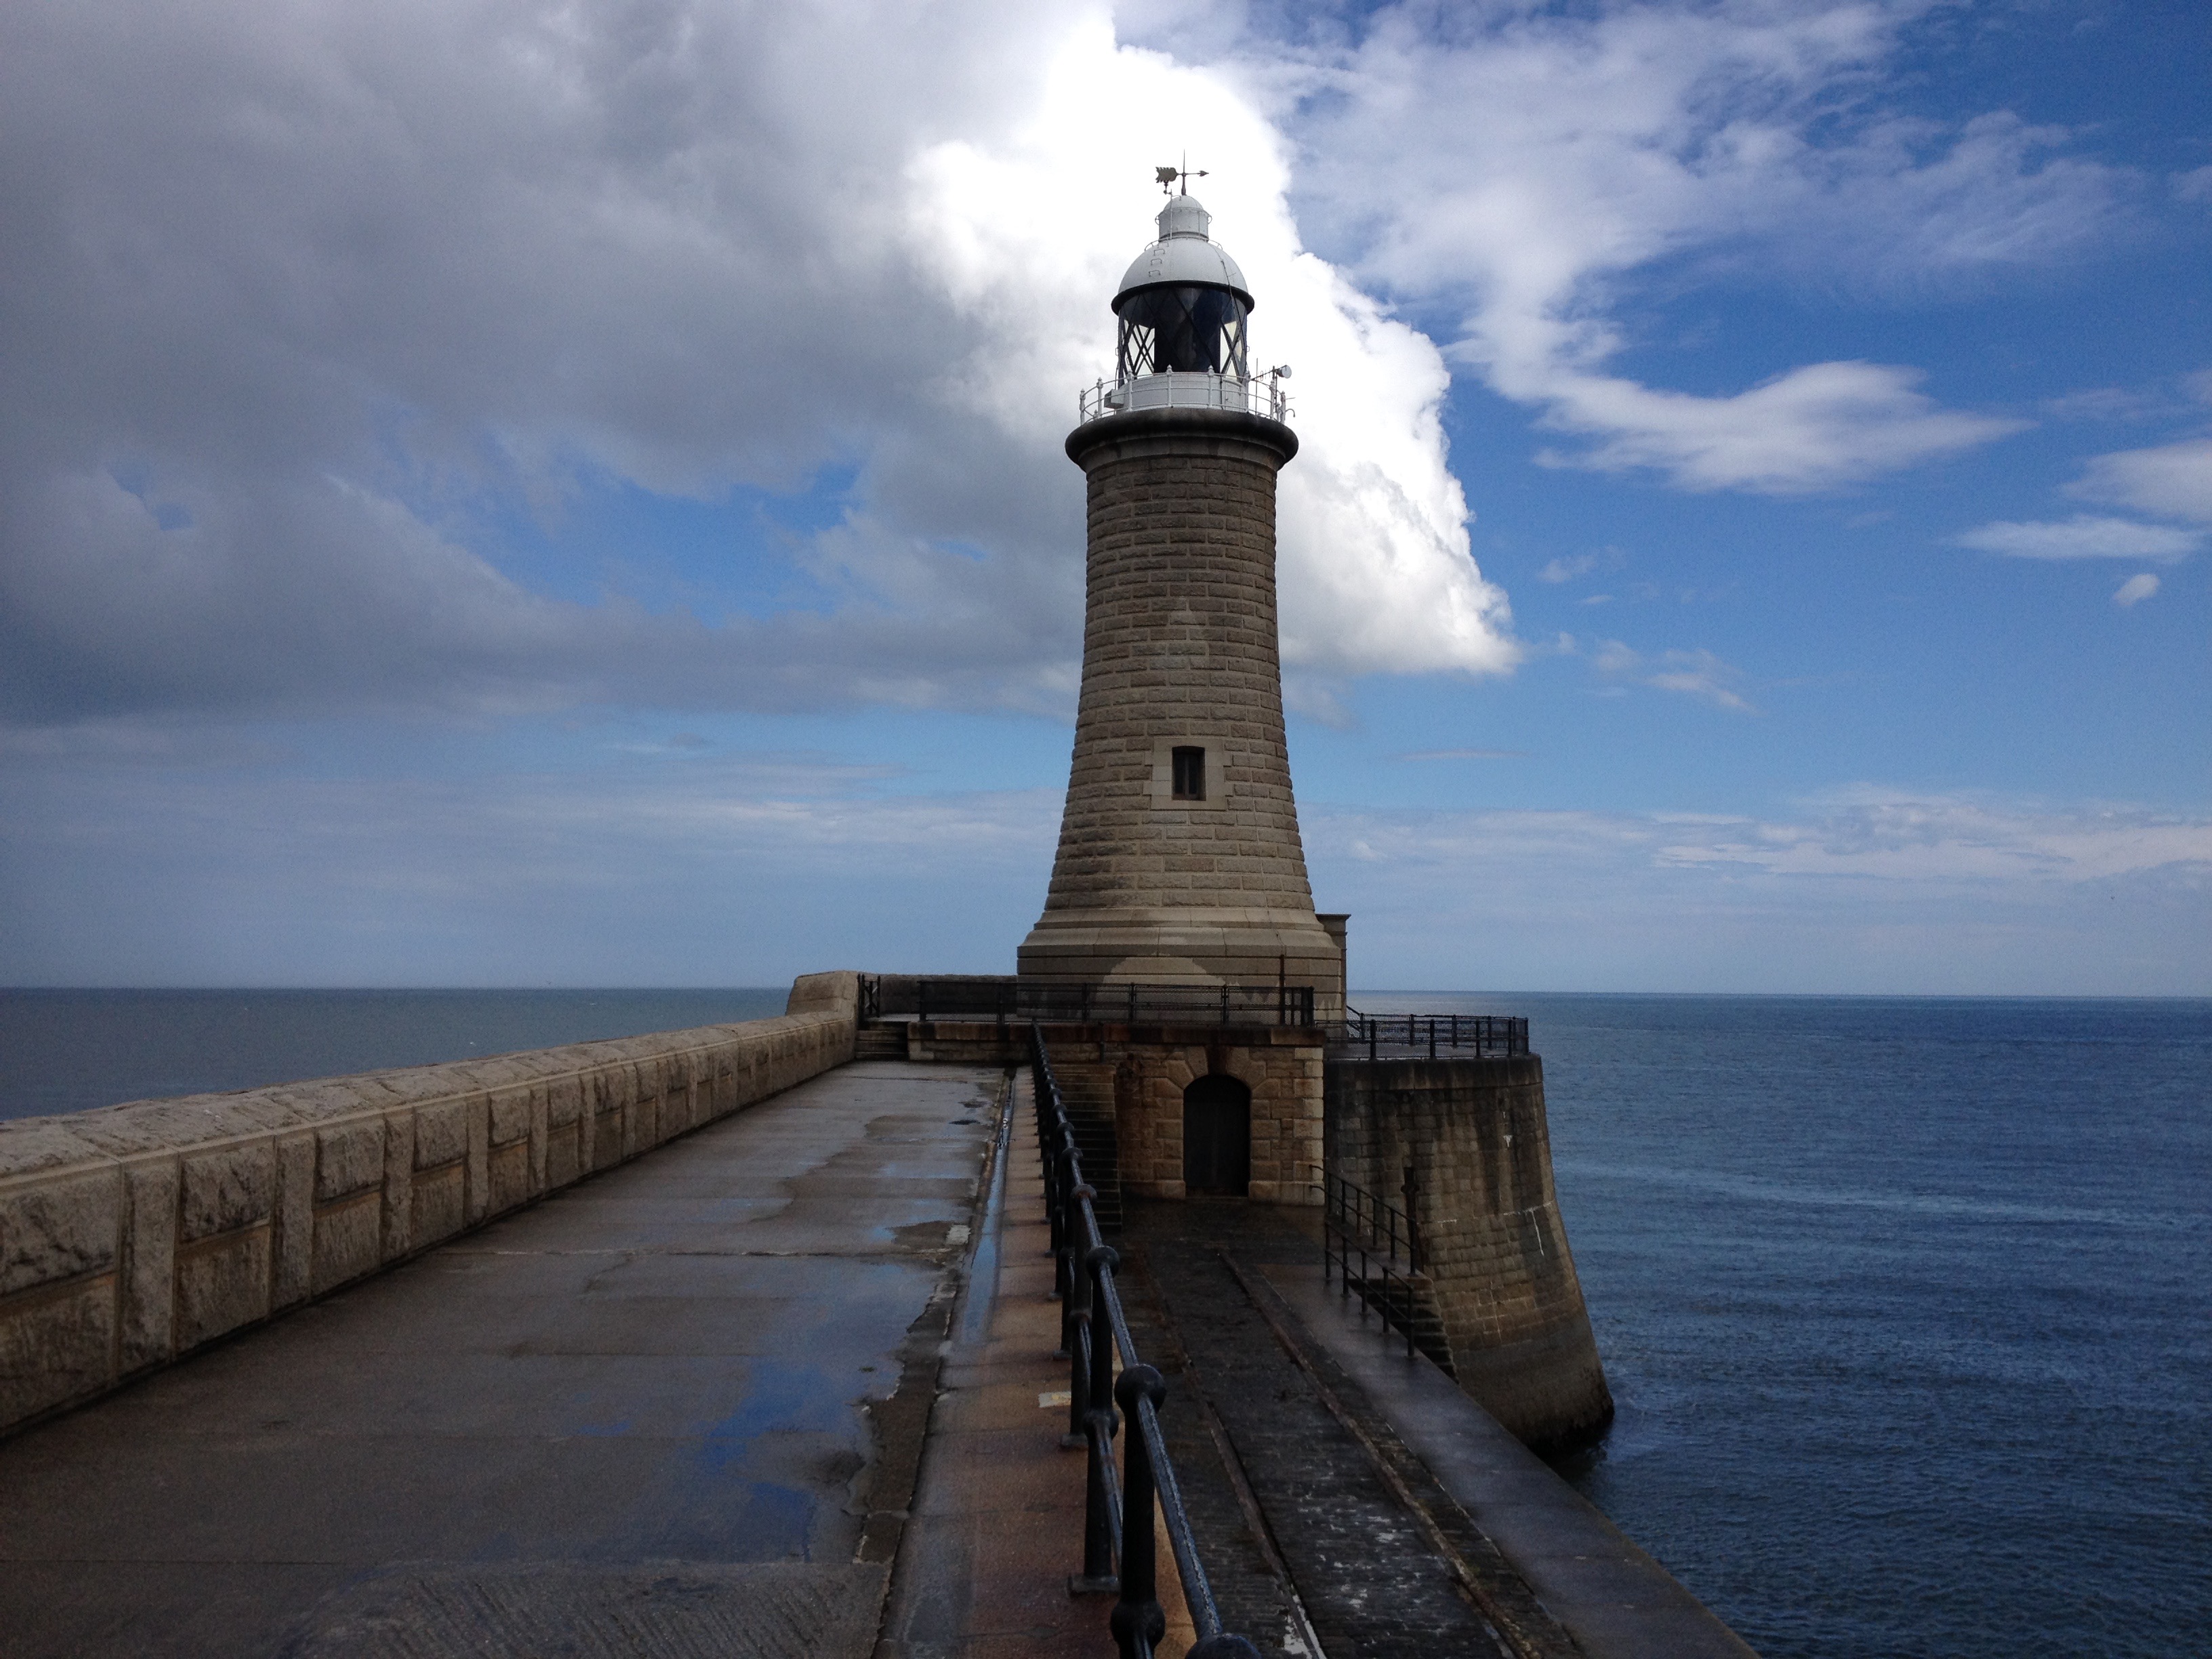 Michael Mulvihill, Tynemouth Lighthouse, North Sea | PSN